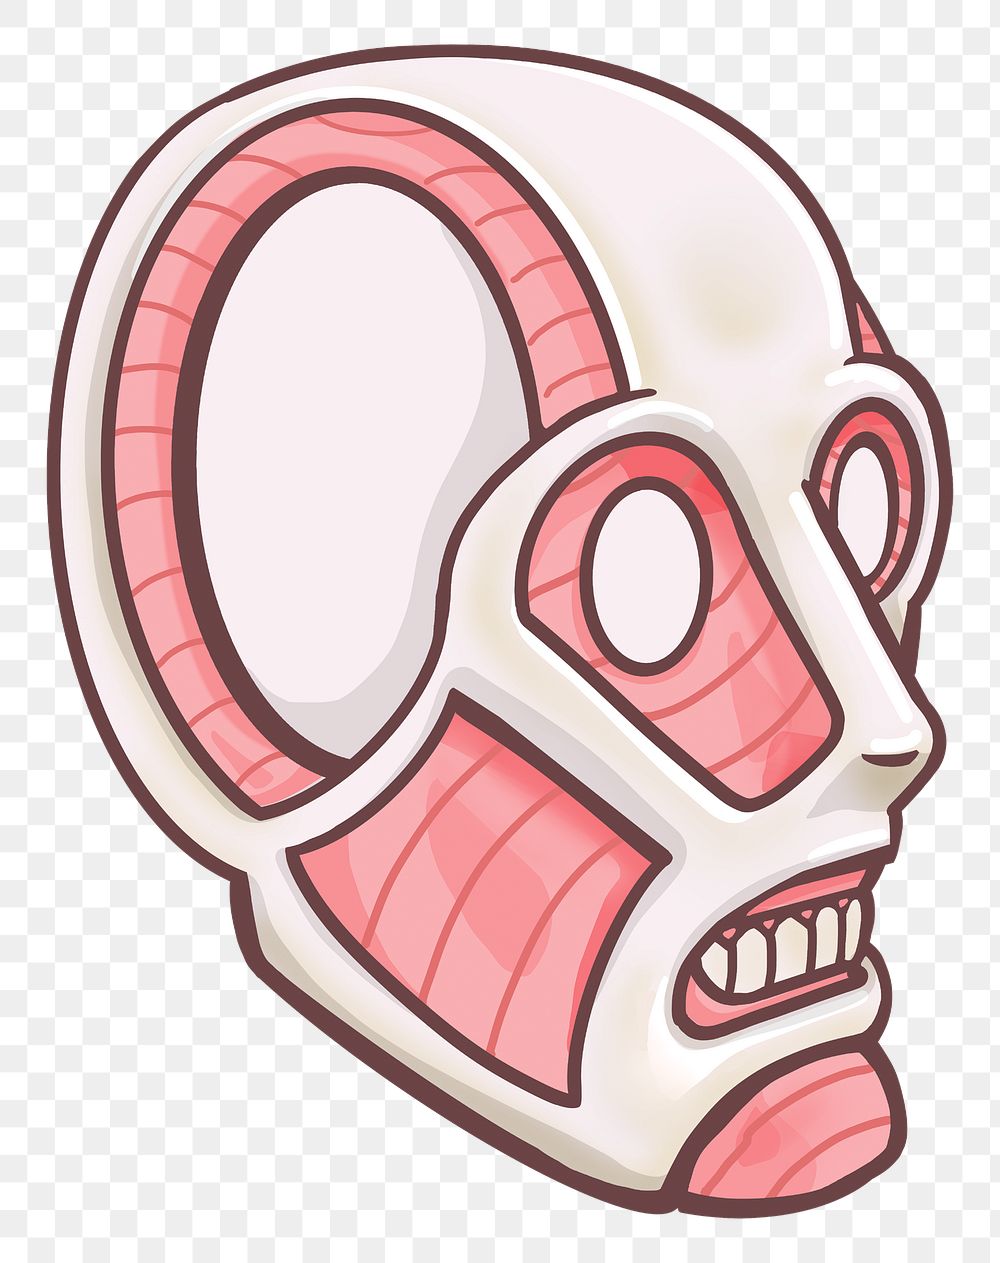 Human head png sticker, transparent background